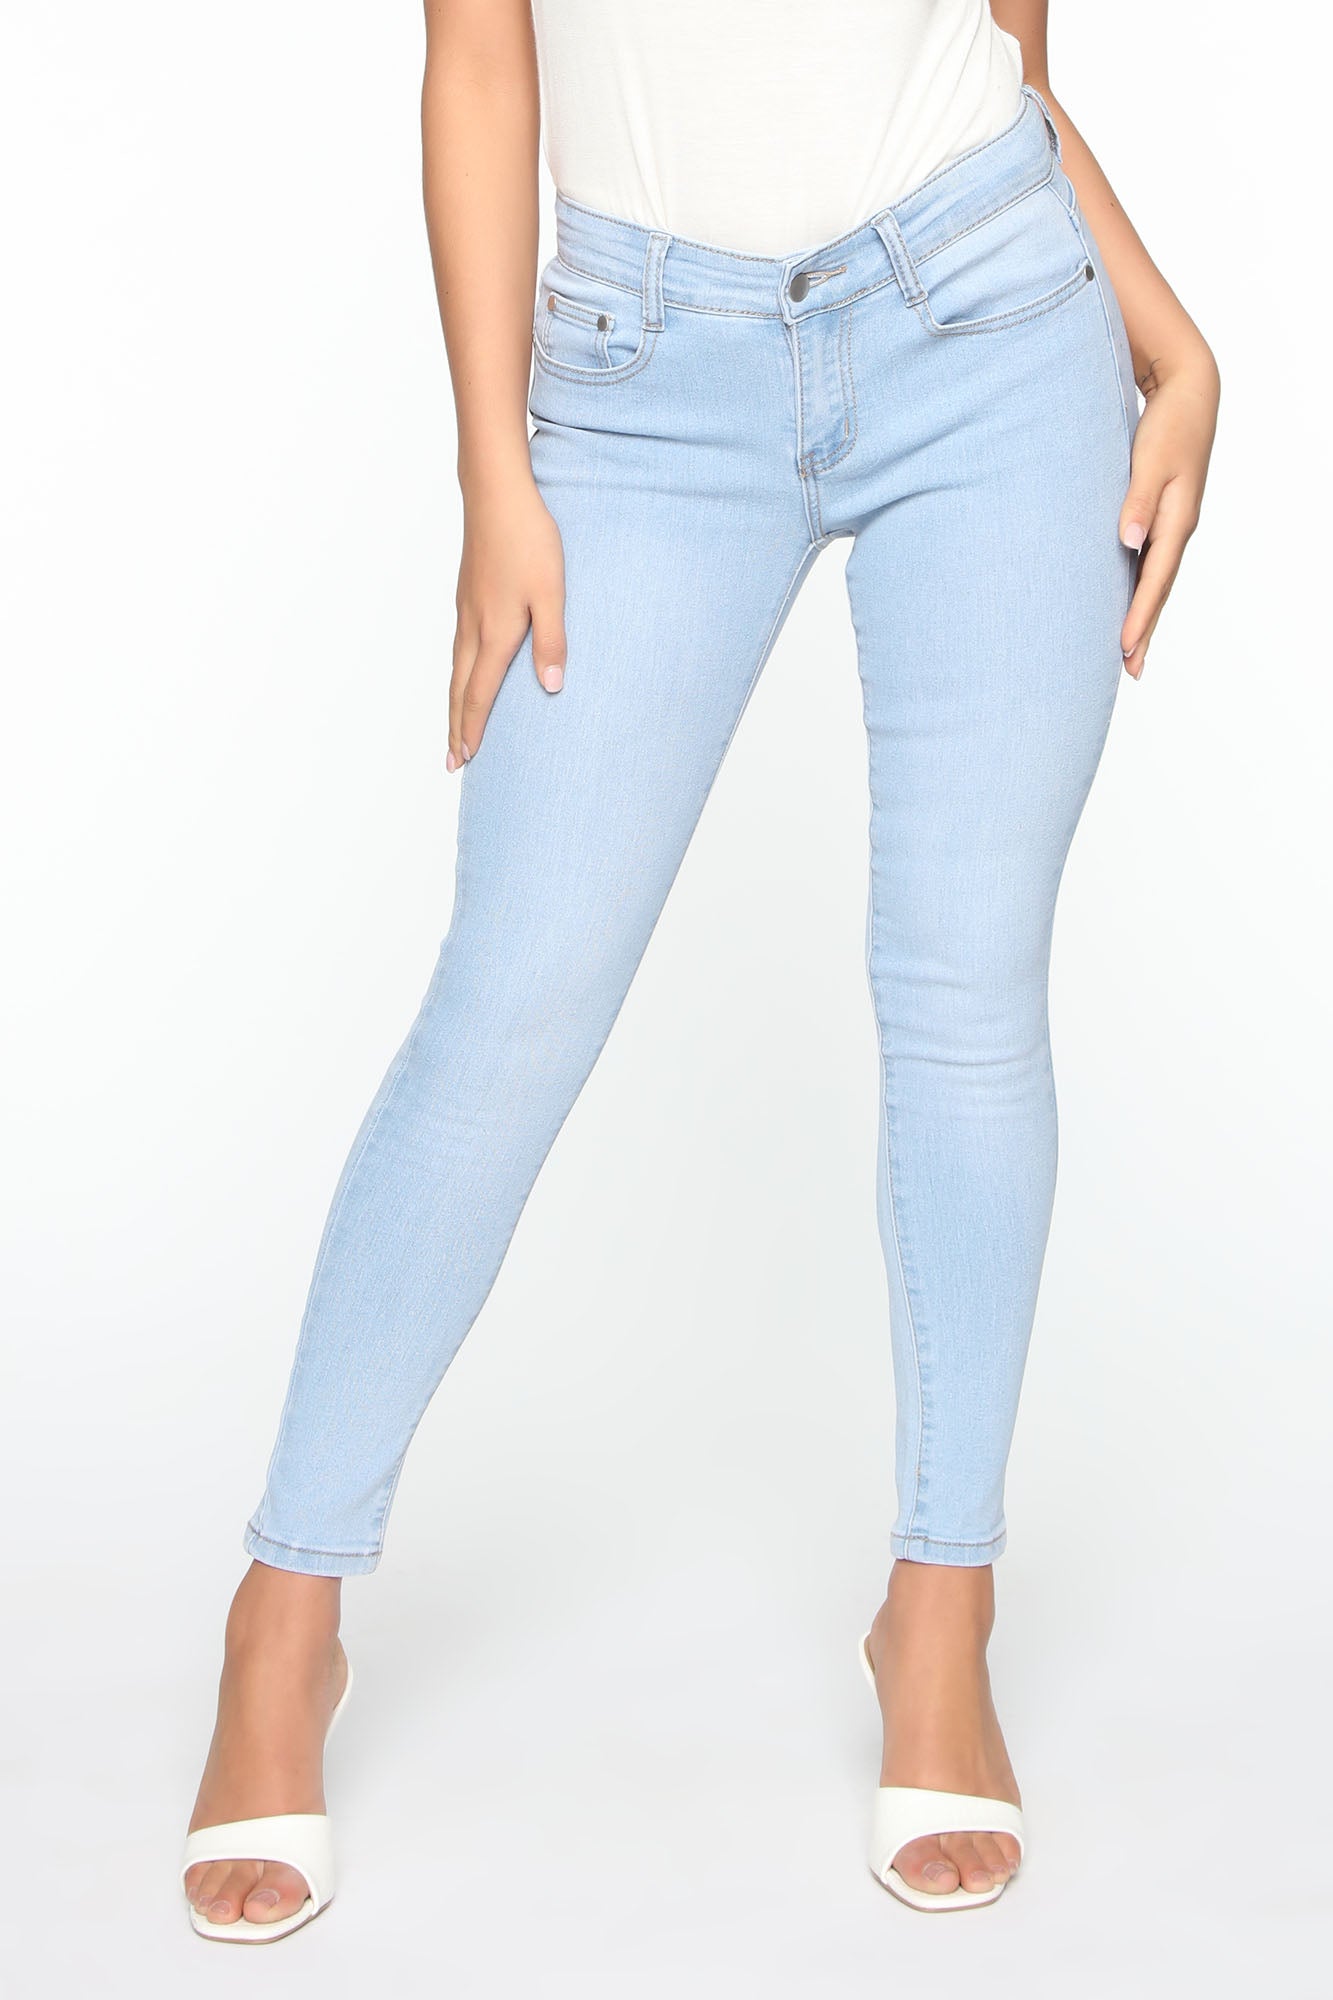 All The Booty Ripped Skinny Jeans - Light Blue Wash – Fashion Nova